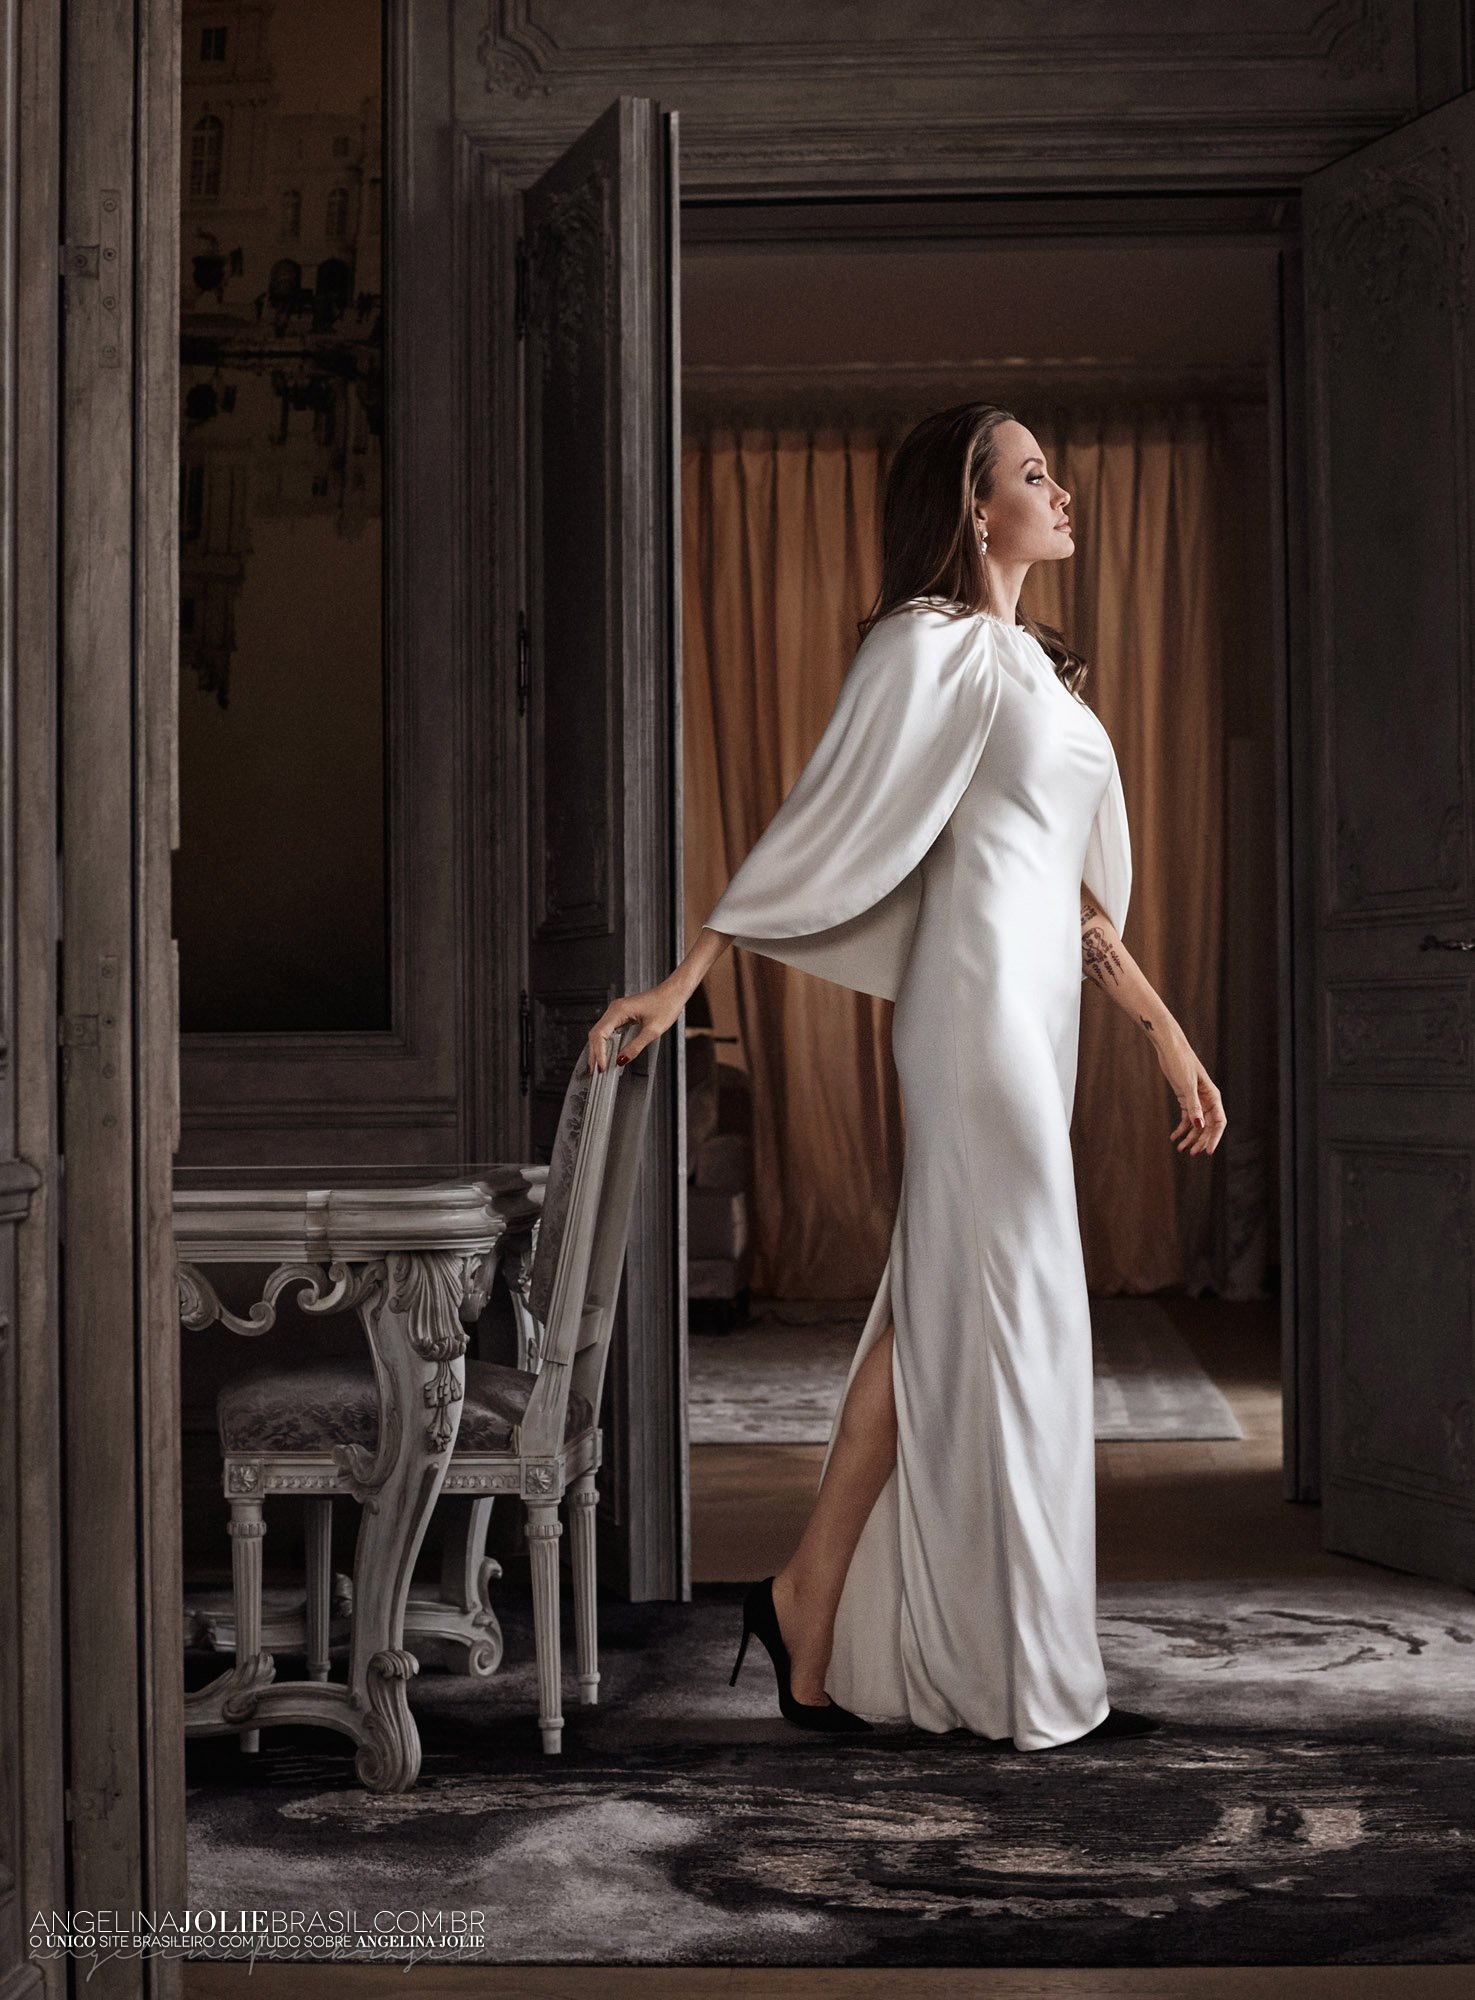 Angelina Jolie Photoshoot 2019